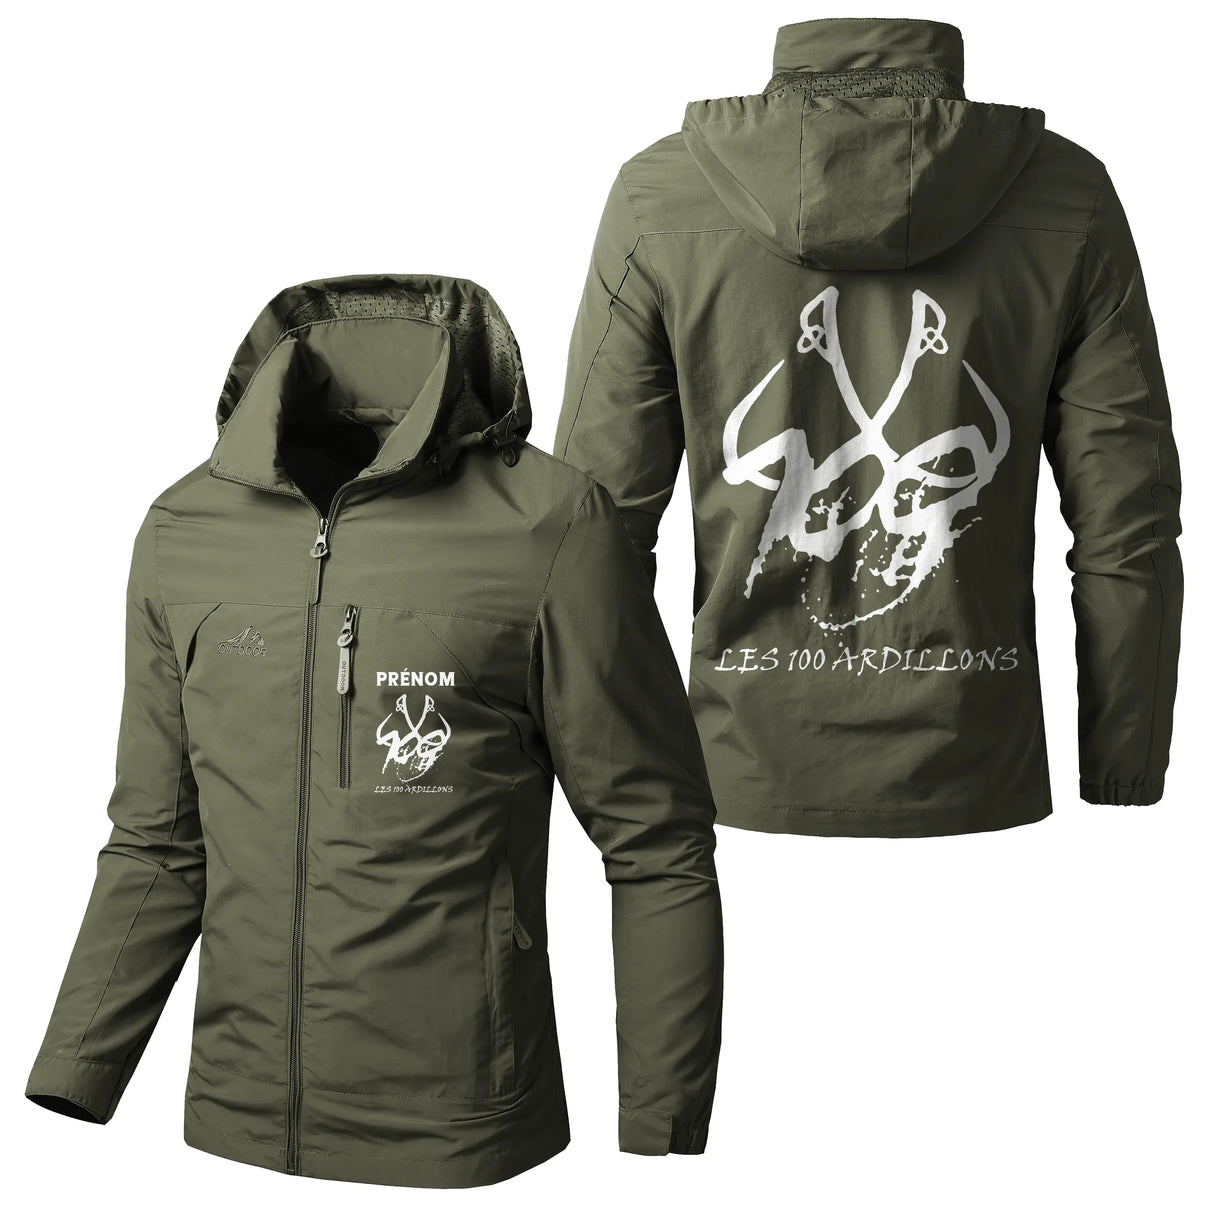 Personalized Waterproof Jacket For Fisherman, Carp Angler, Carp Fishing, Original Fisherman Gift - LES 100 ARDILLONS - CT210923KYC